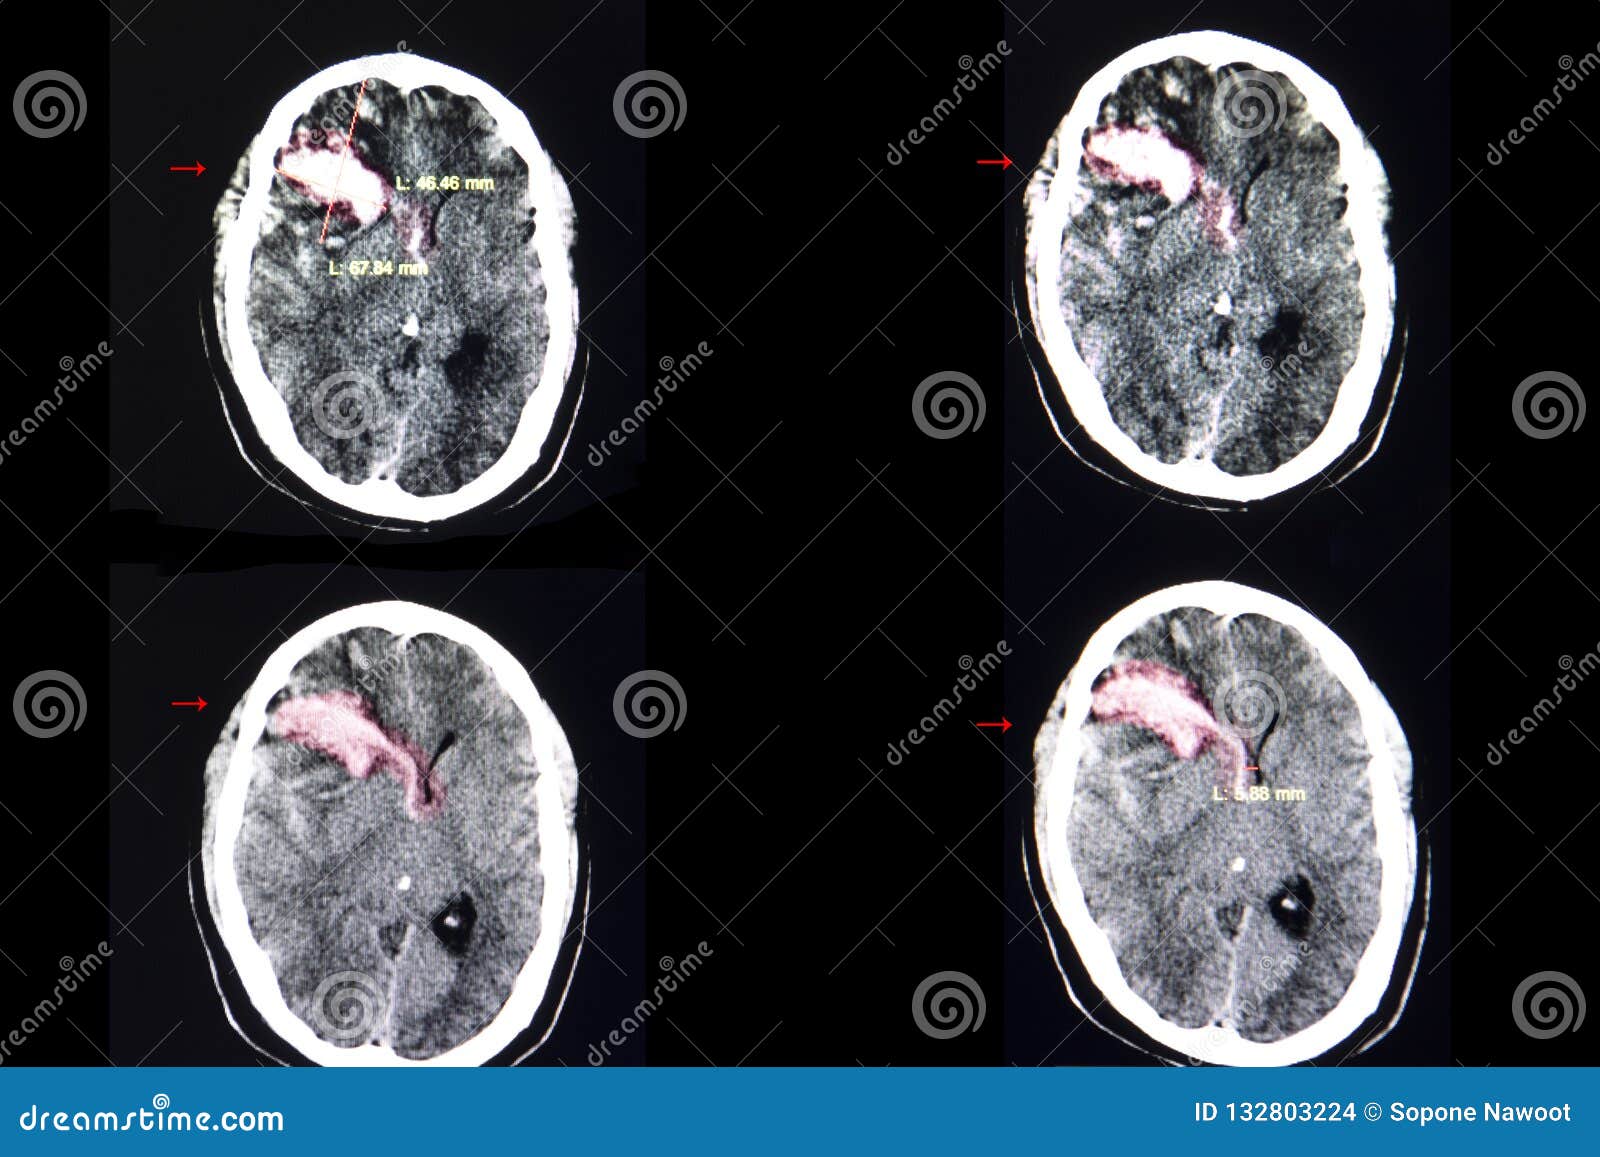 brain ct scan, intracerebral hemorrhage